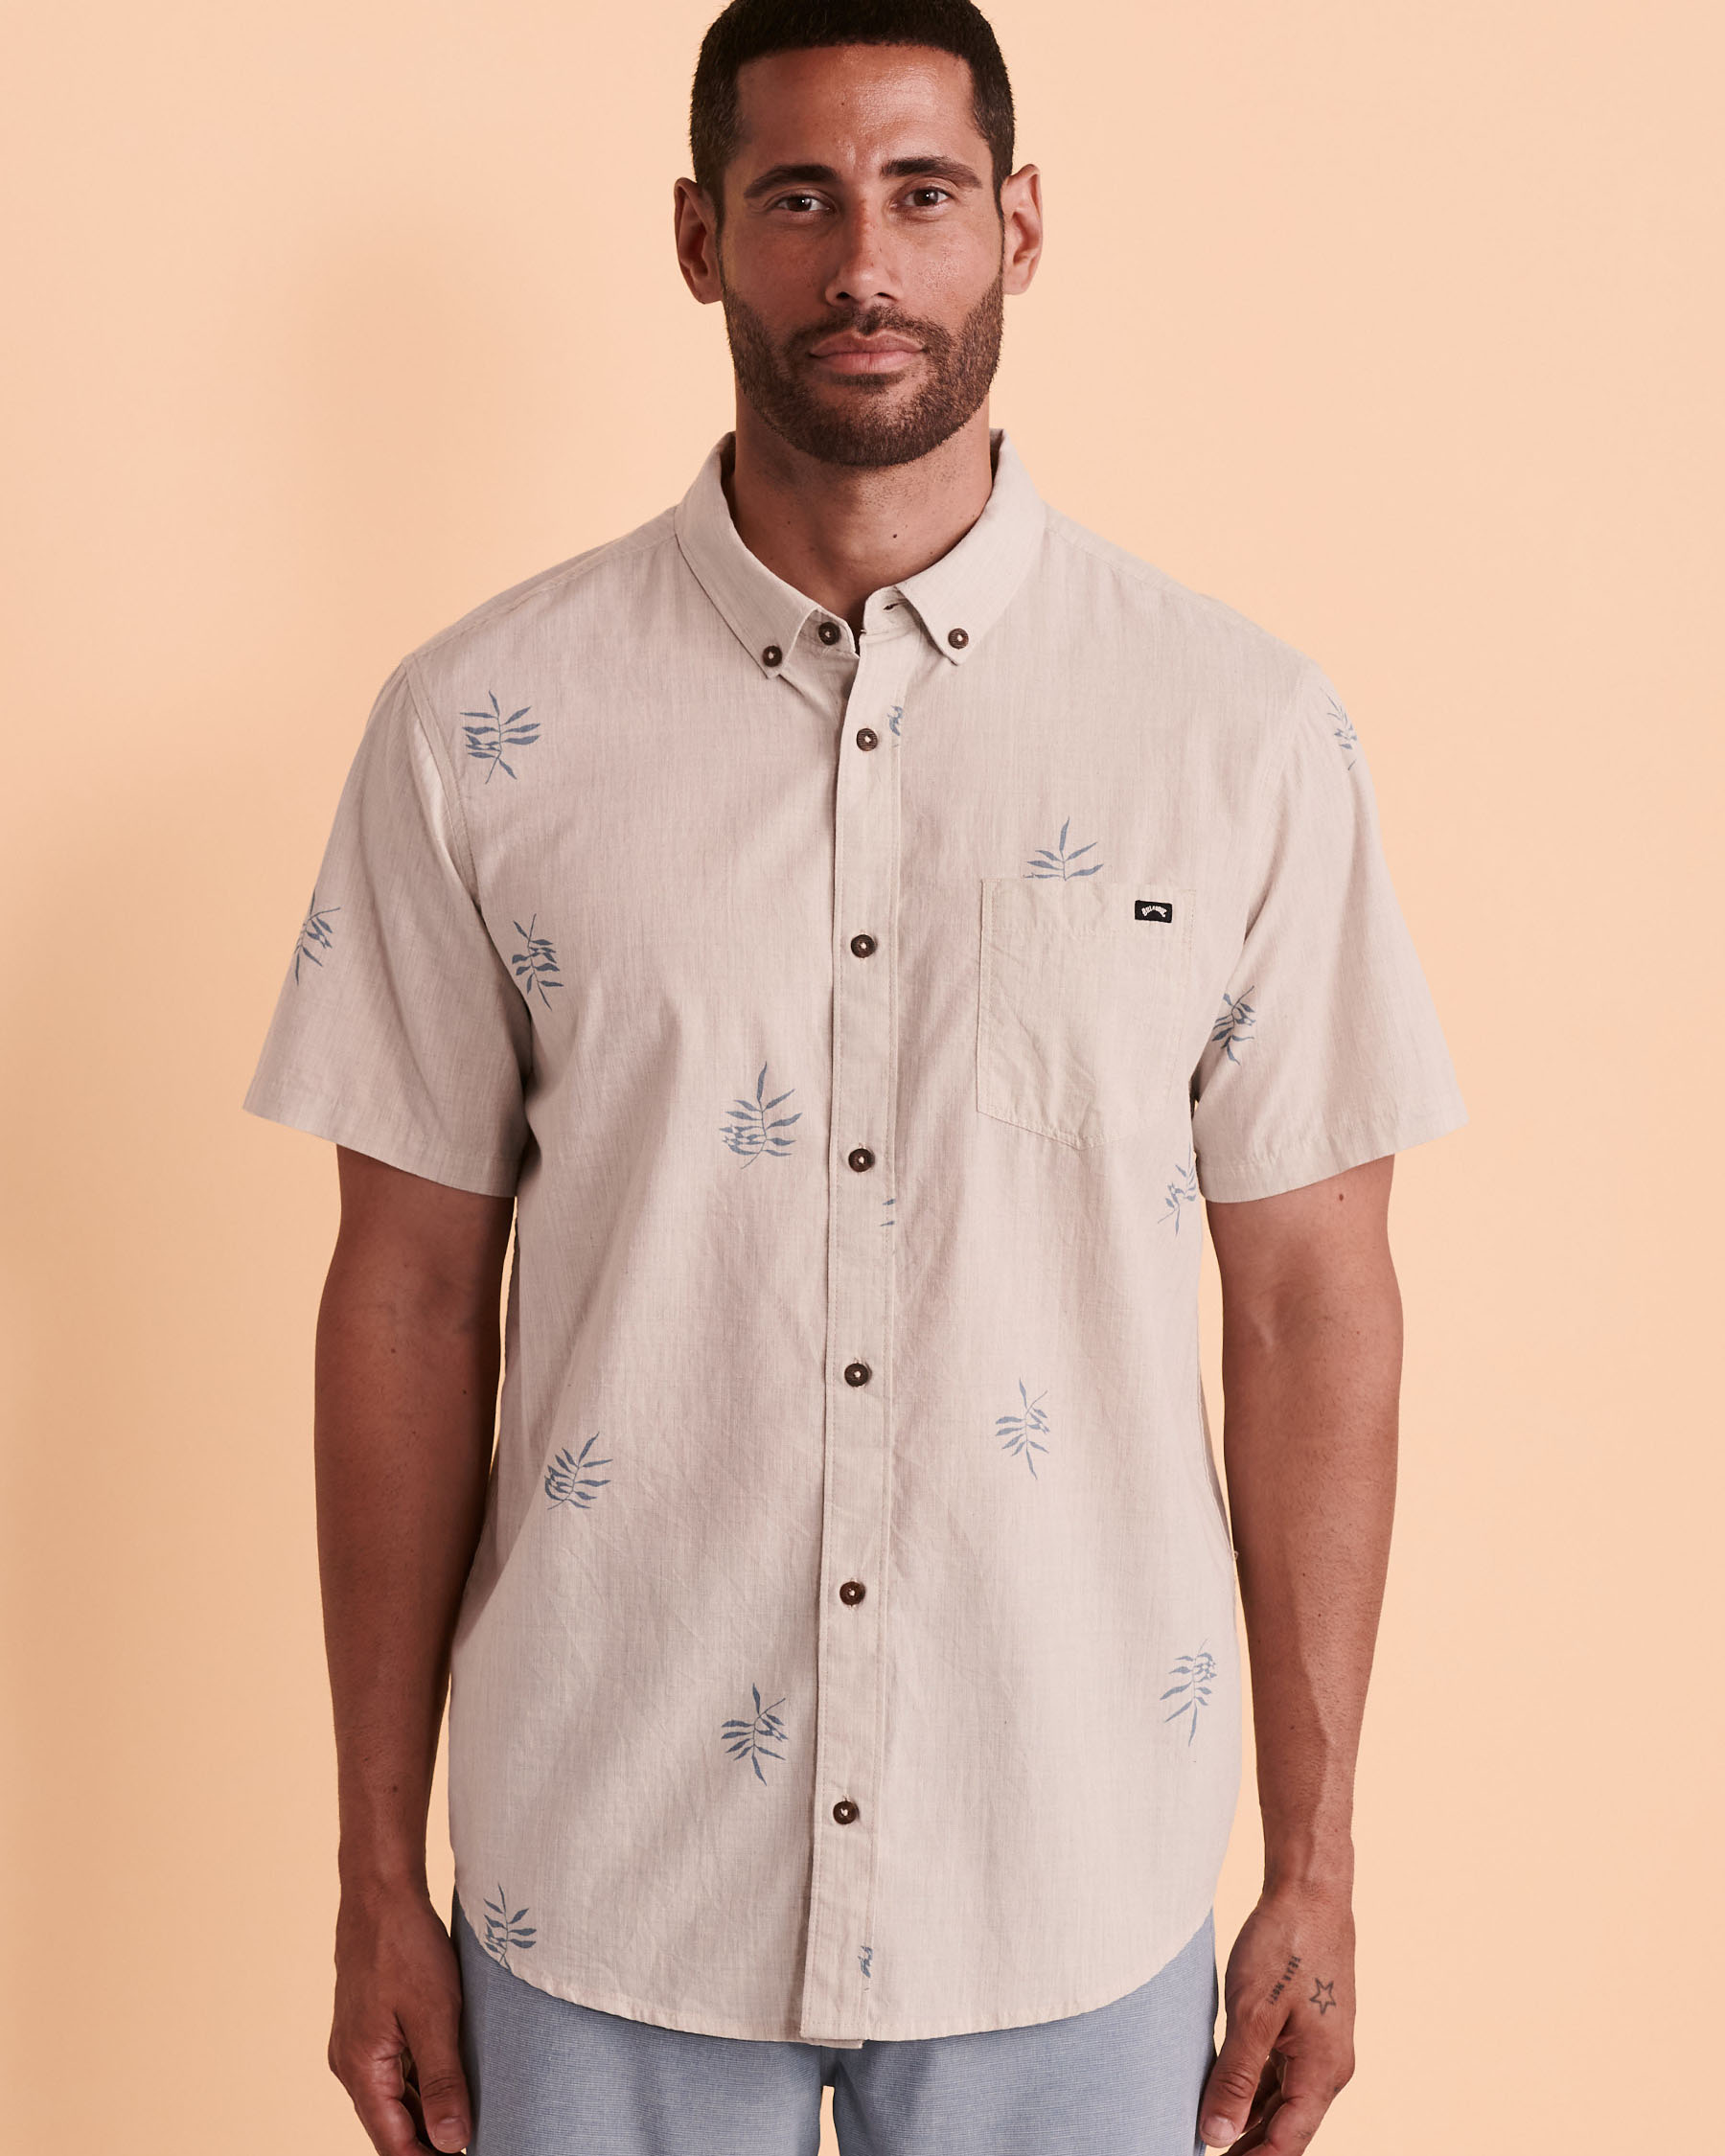 BILLABONG SUNDAYS MINI Short Sleeve Shirt Light print ABYWT00203 - View1